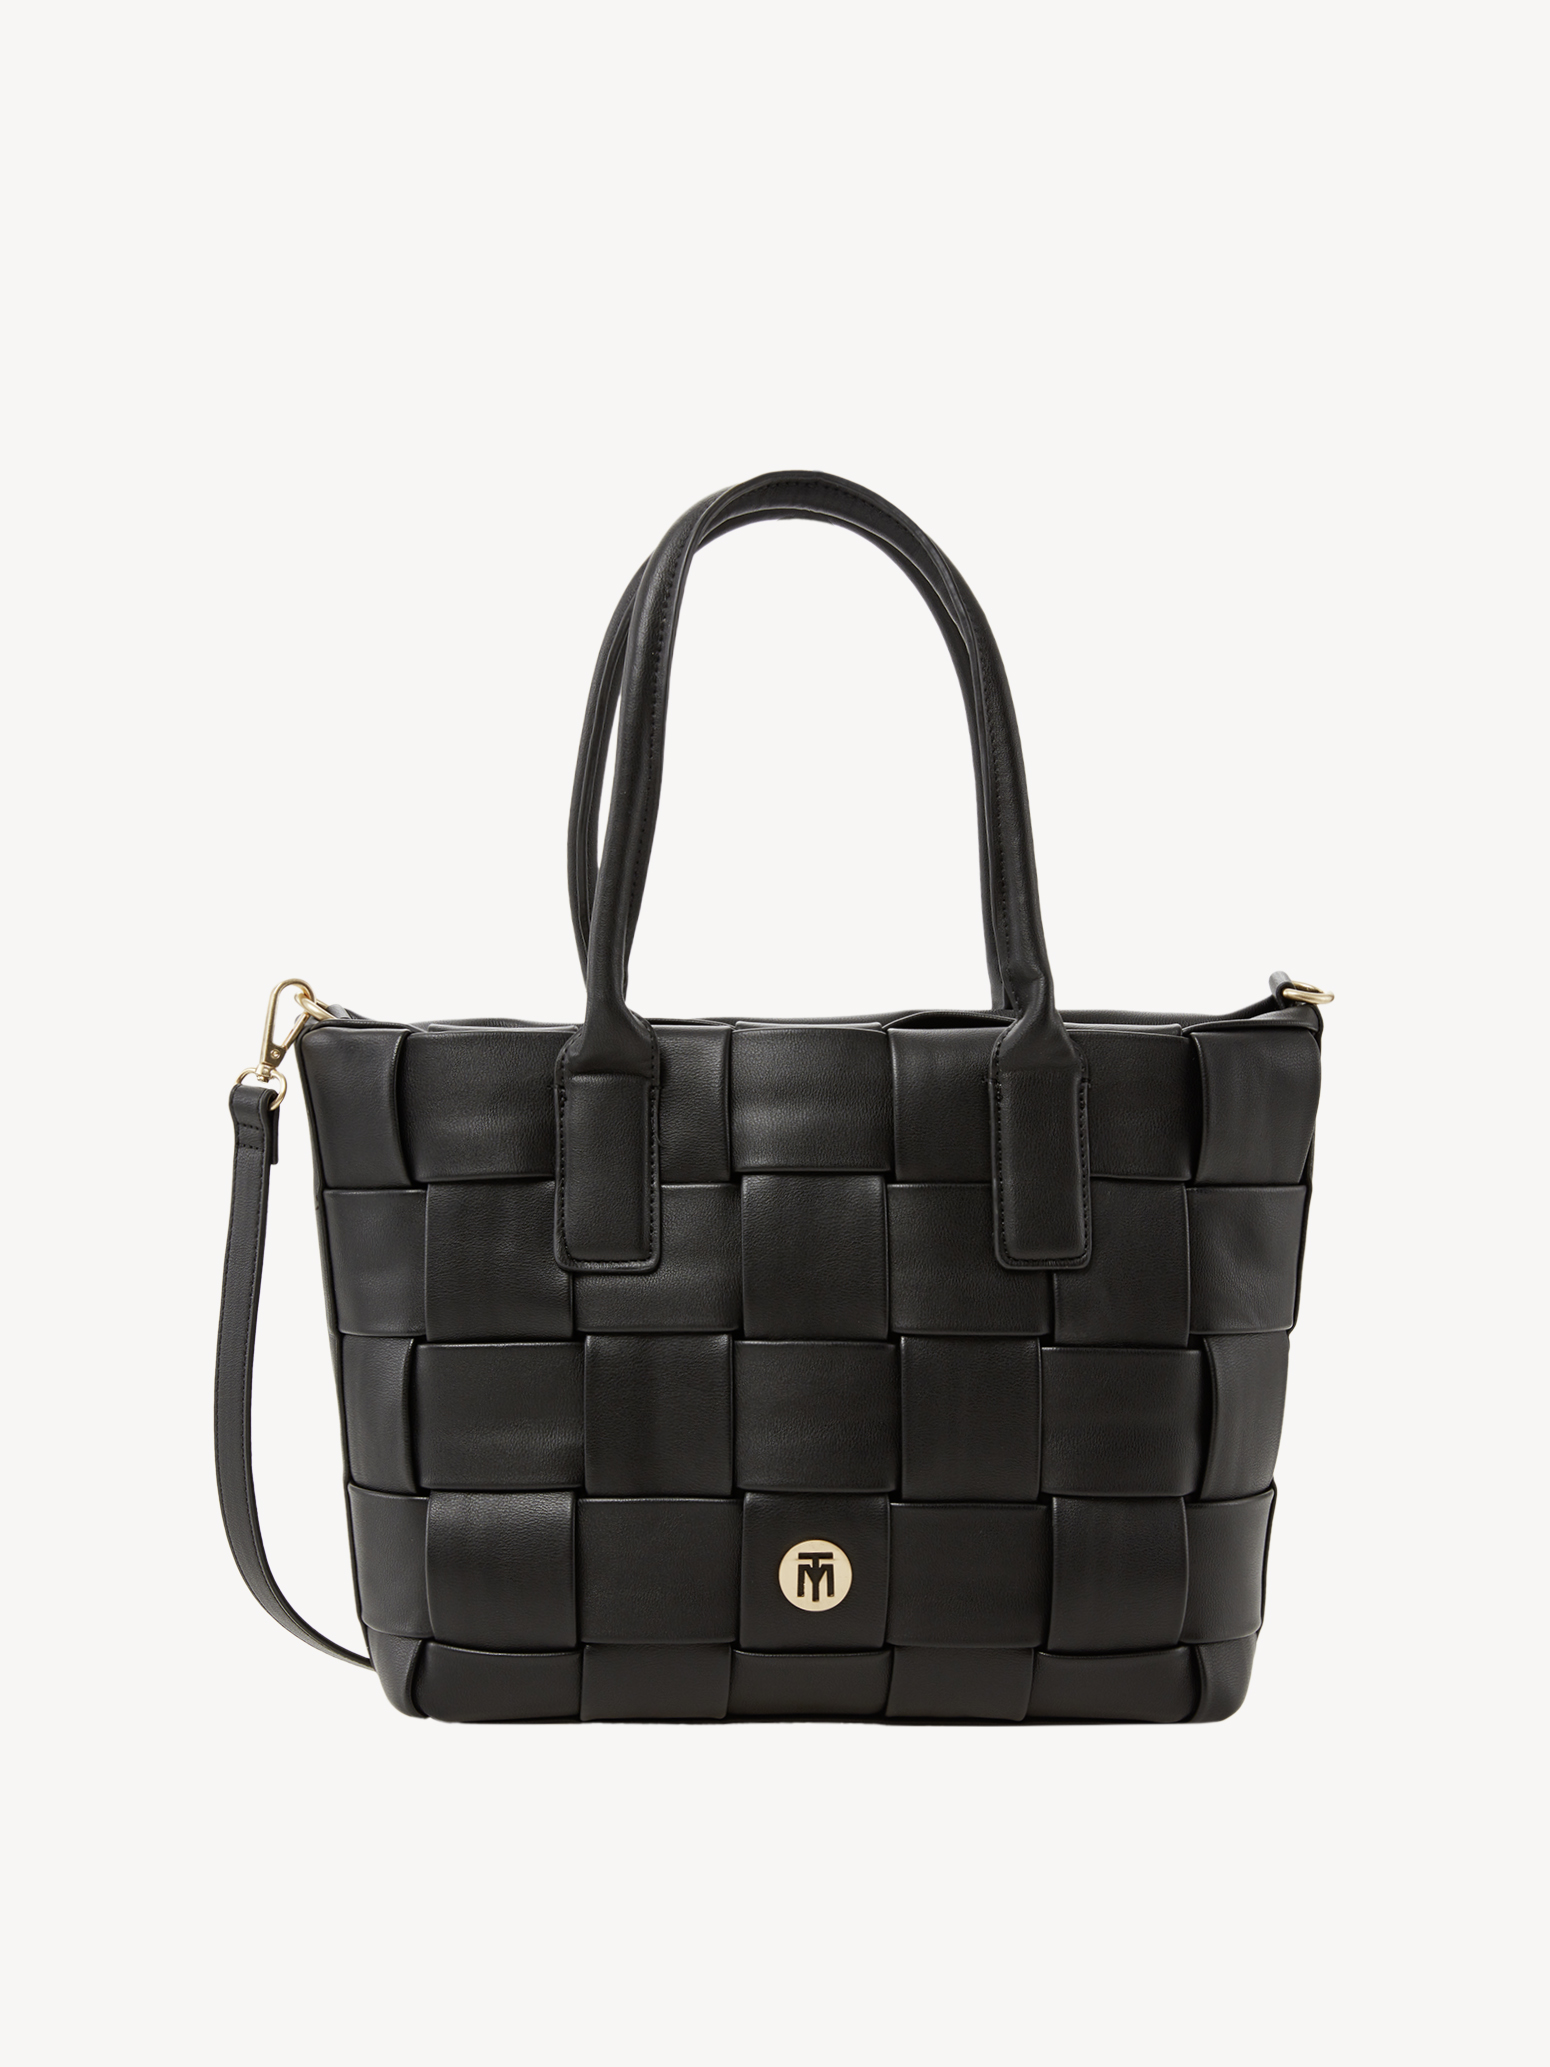 Shopping bag - black